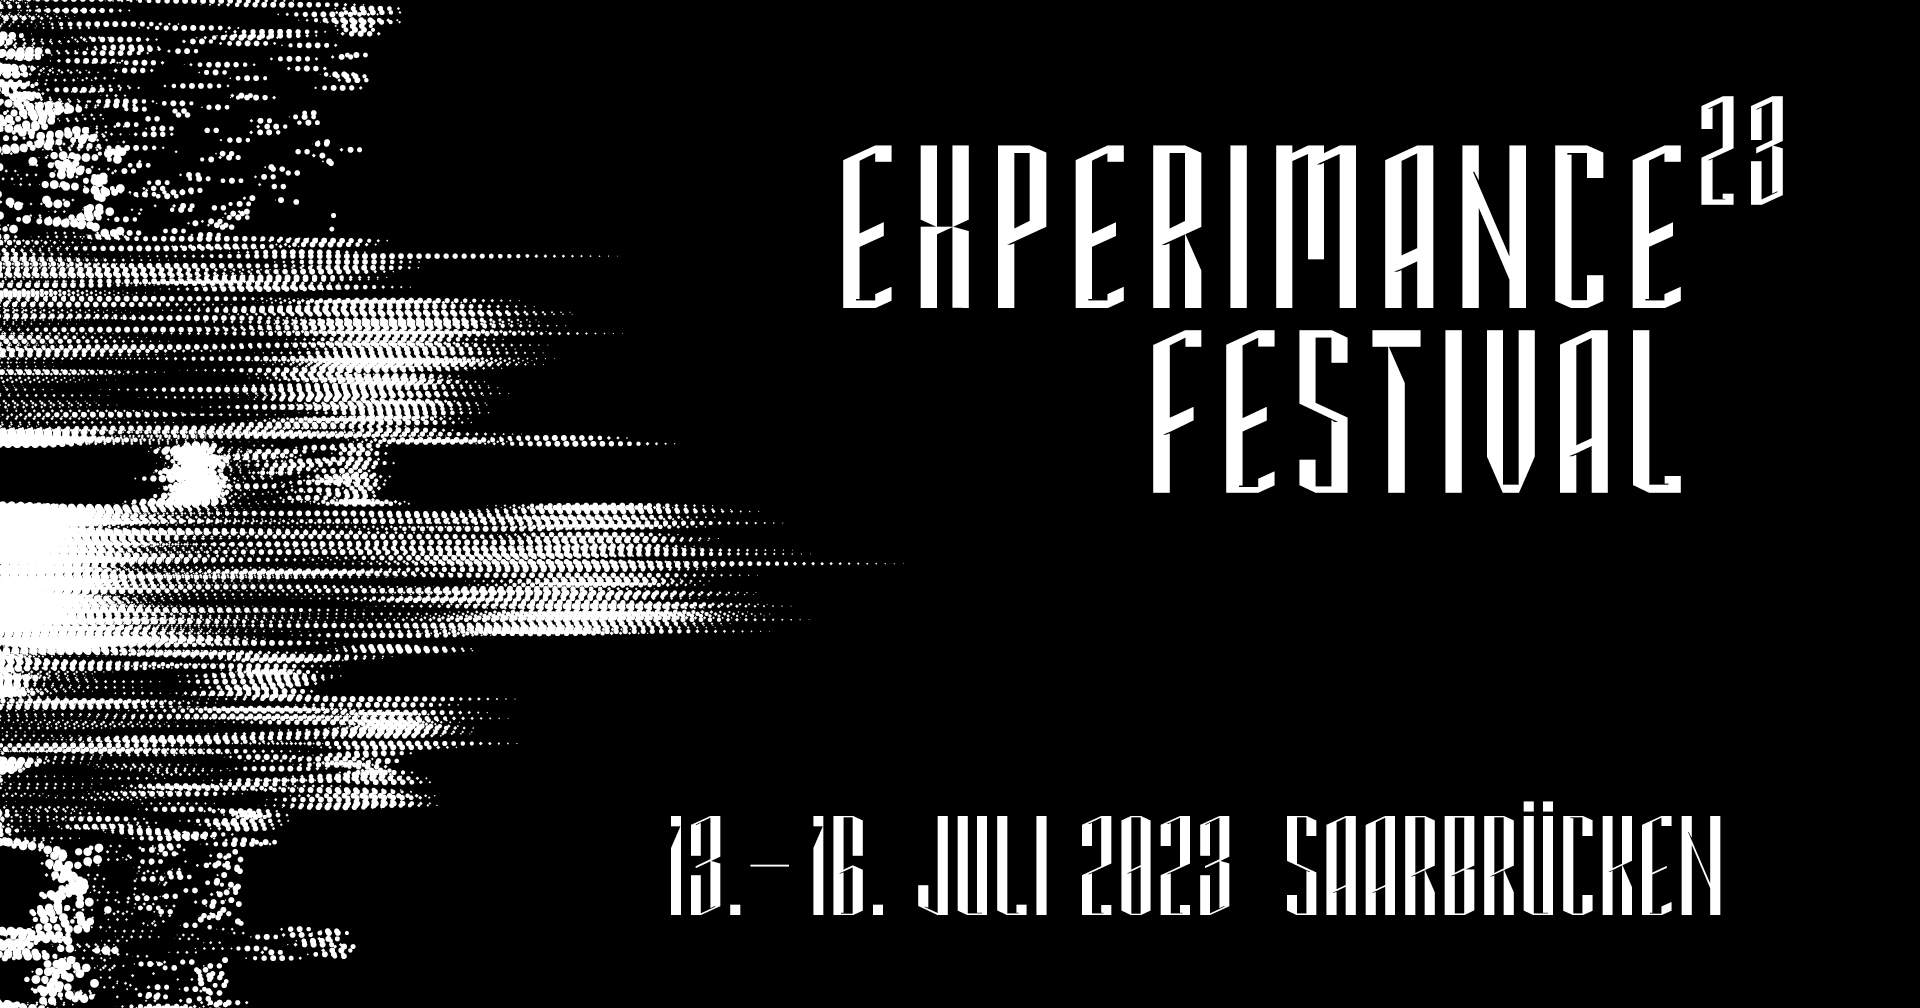 Experimance Festival - フライヤー表